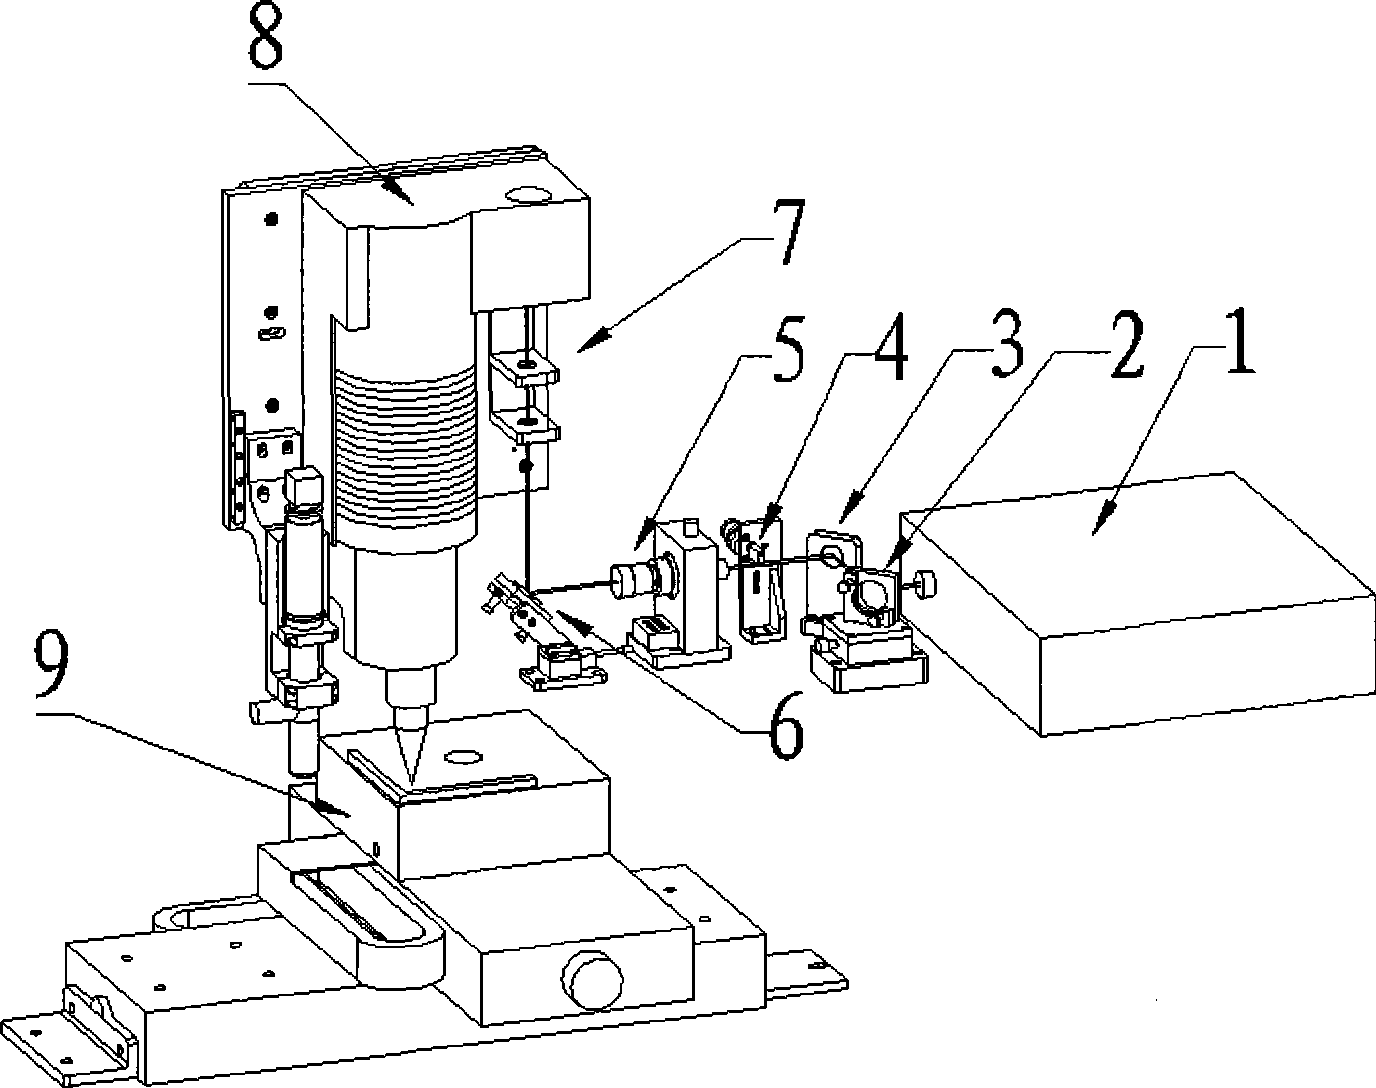 Picosecond laser machining apparatus for processing nozzle micropore